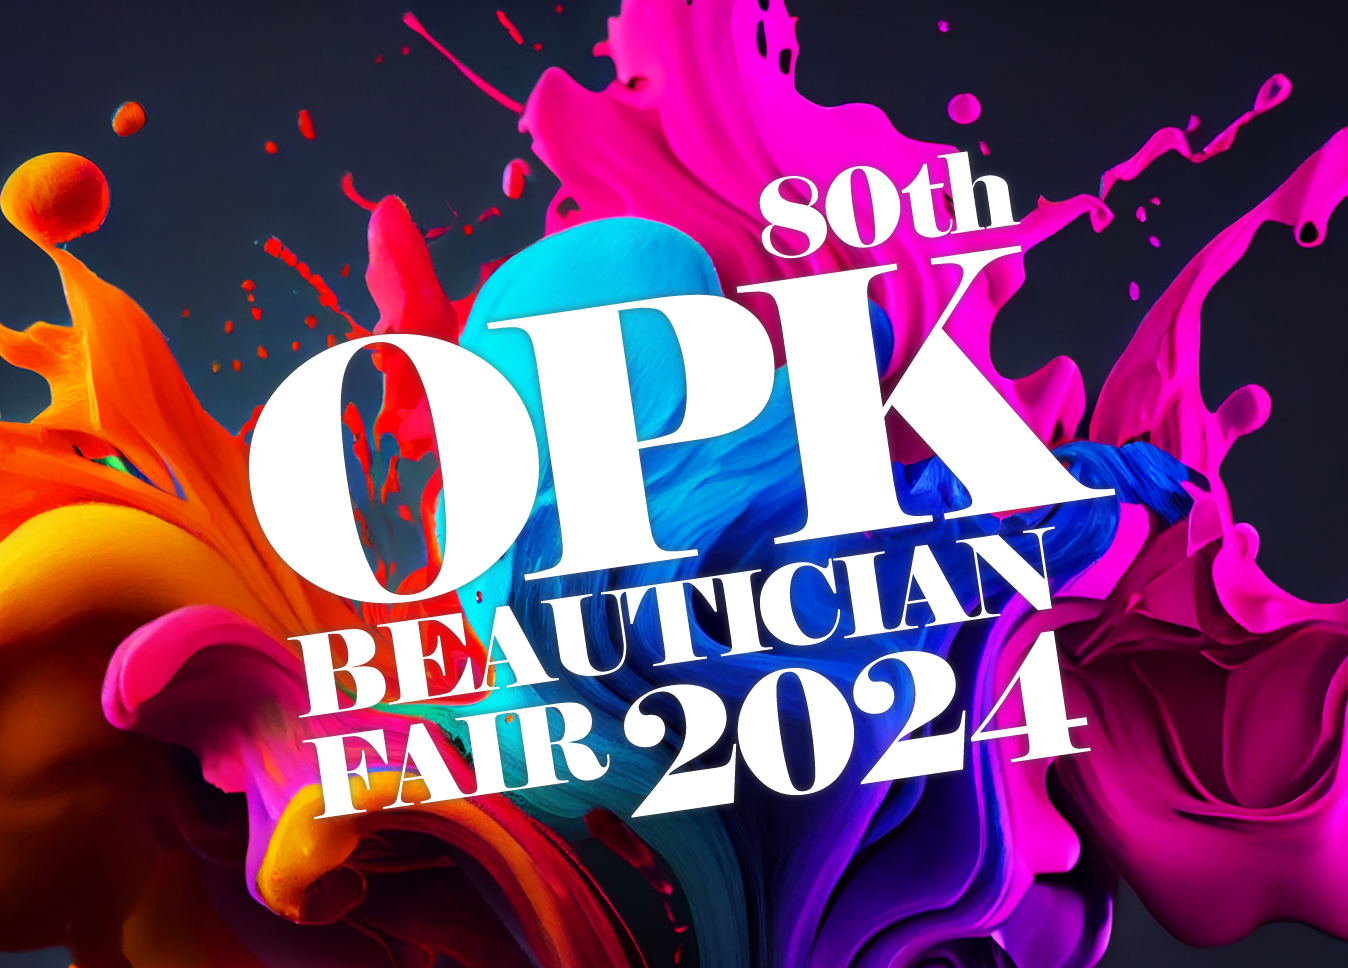 OPK Beautician Fair 2023